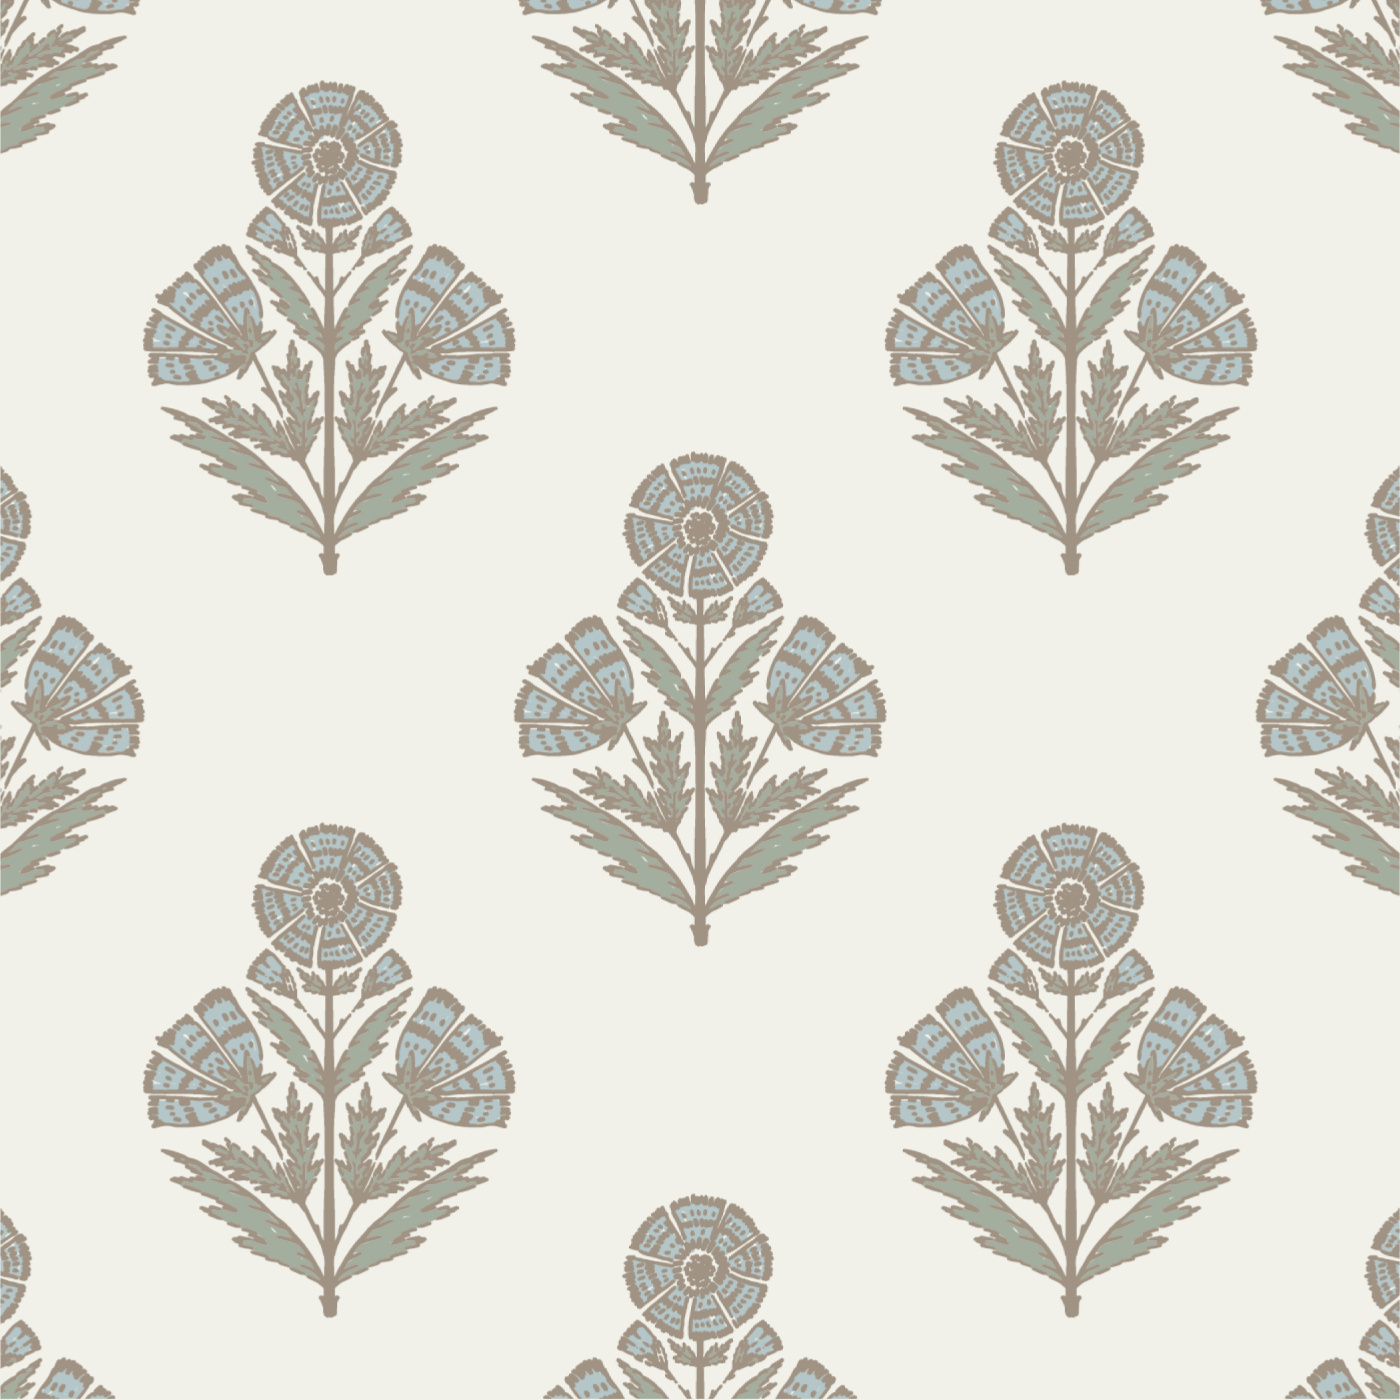 406626533  Inge Light Grey Floral Block Print Wallpaper  by AStreet  Prints